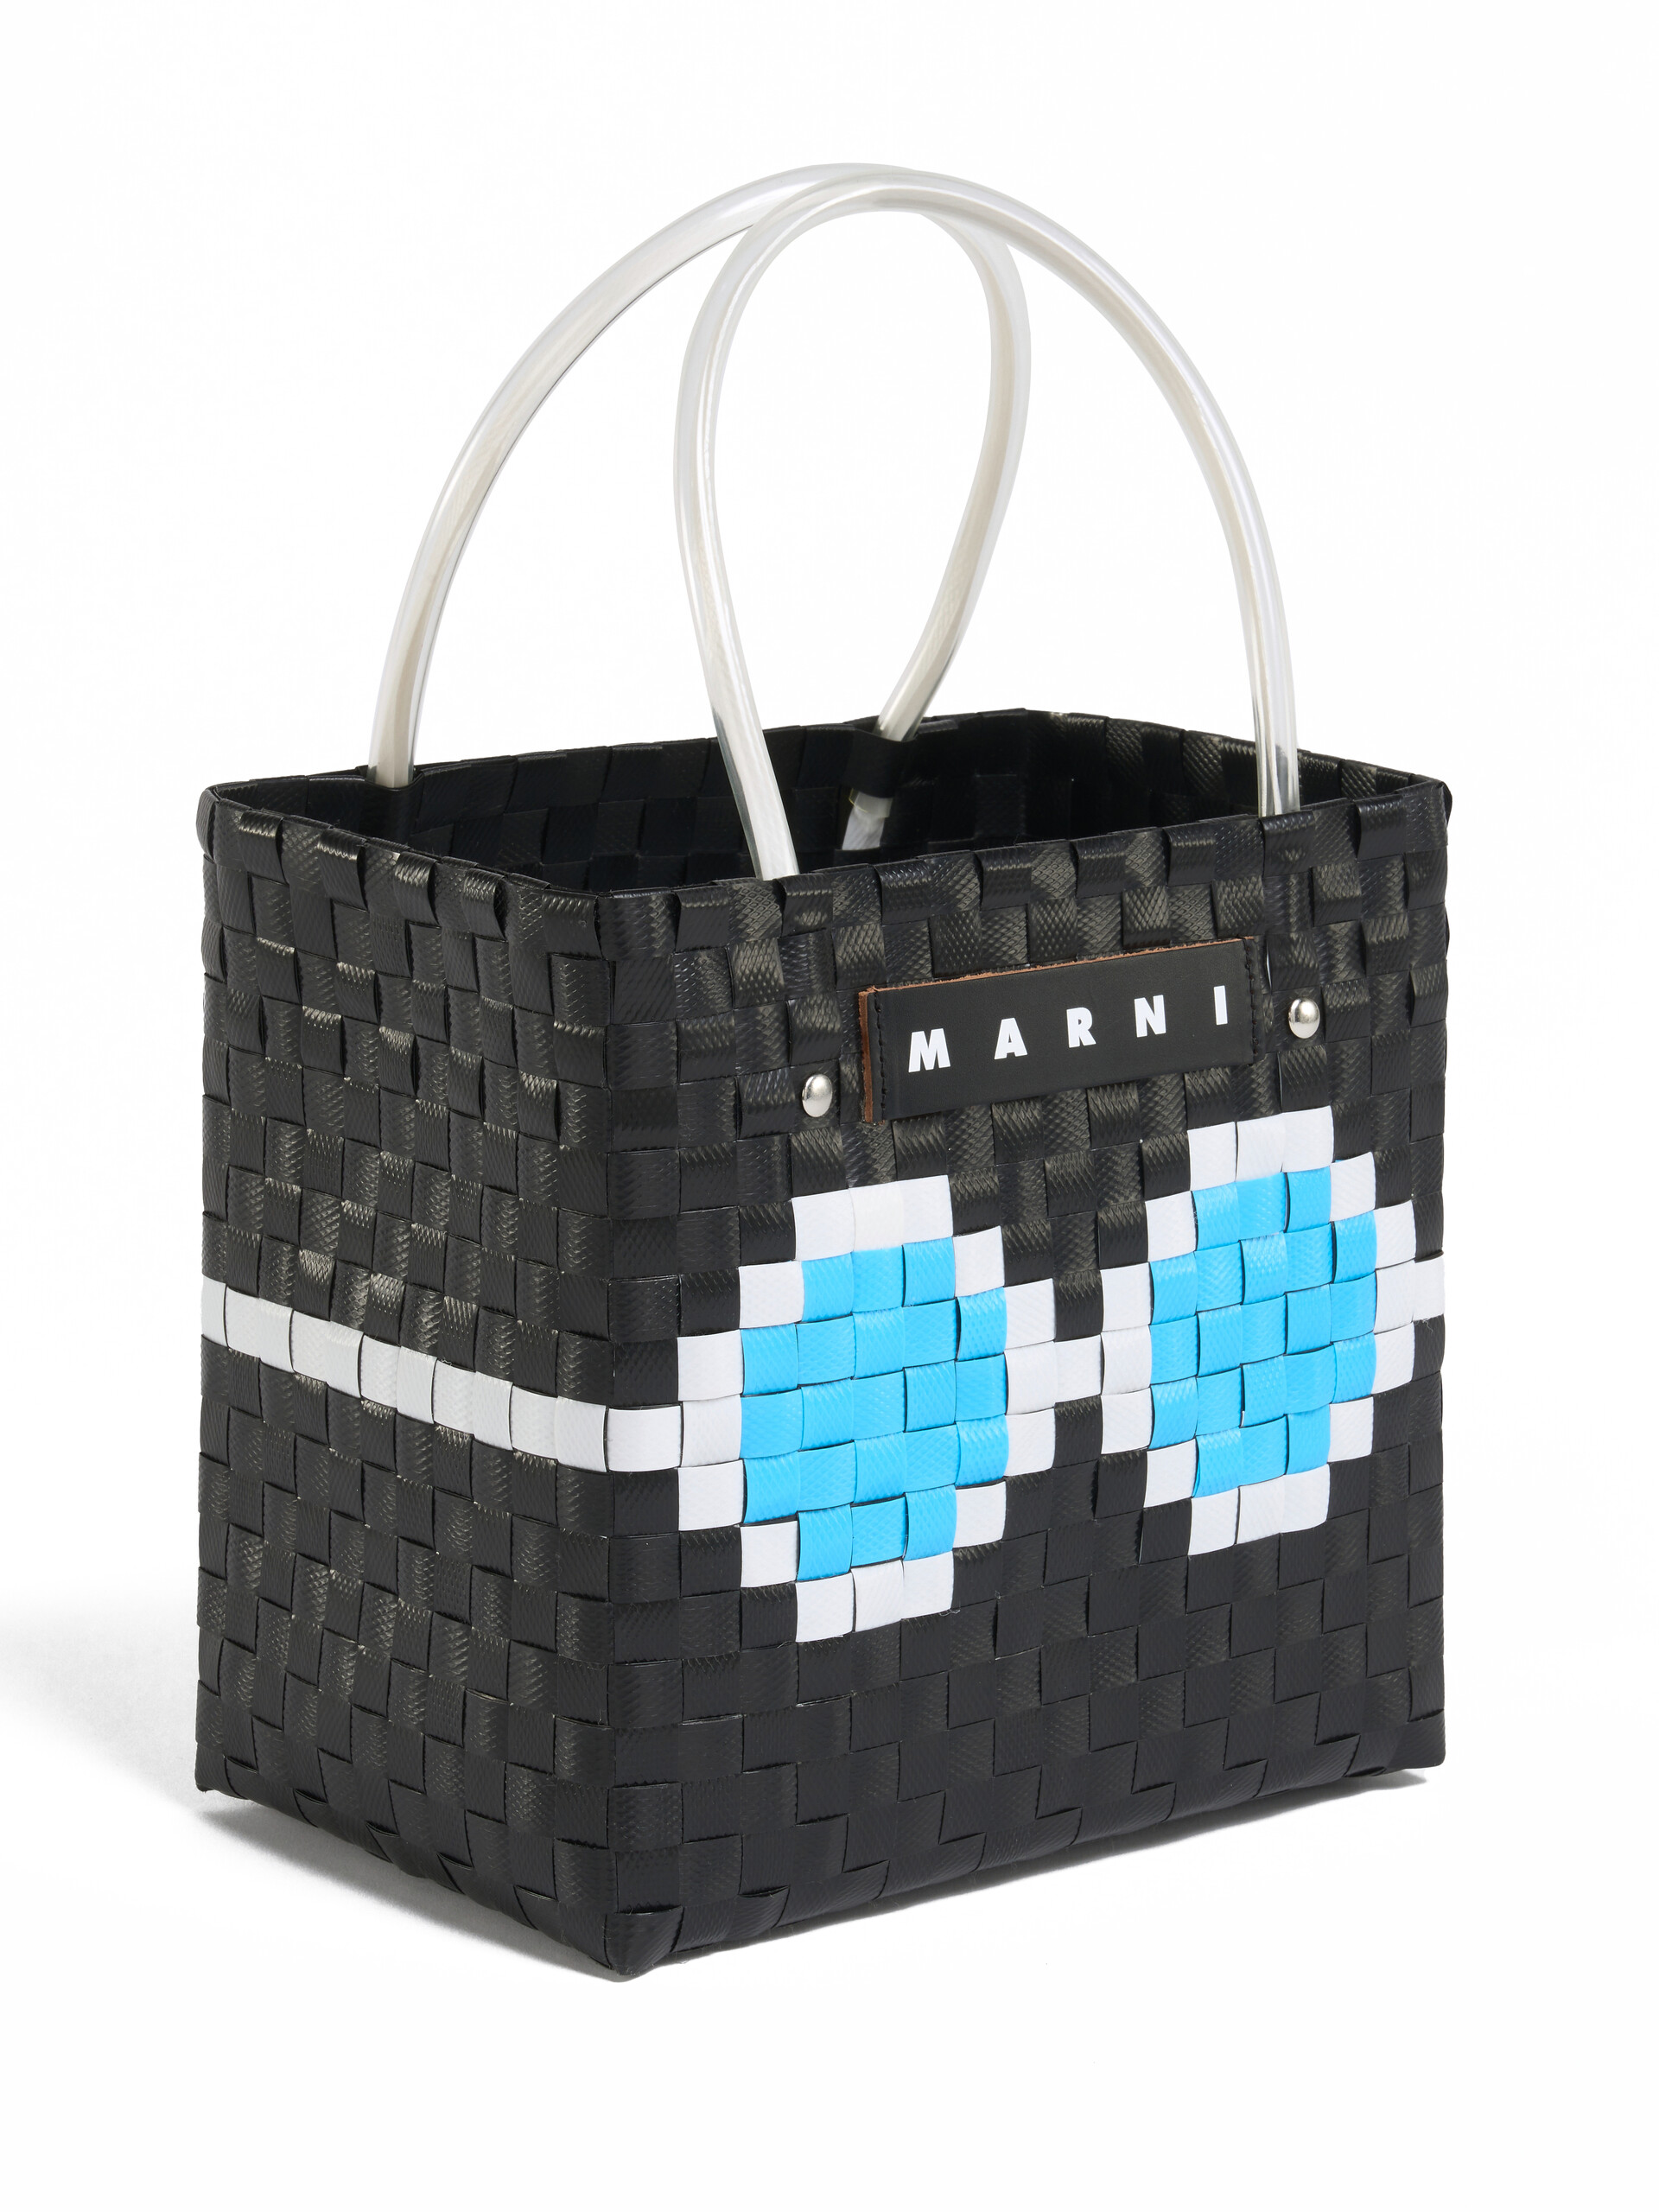 Black MARNI MARKET SUN BASKET bag - Shopping Bags - Image 4